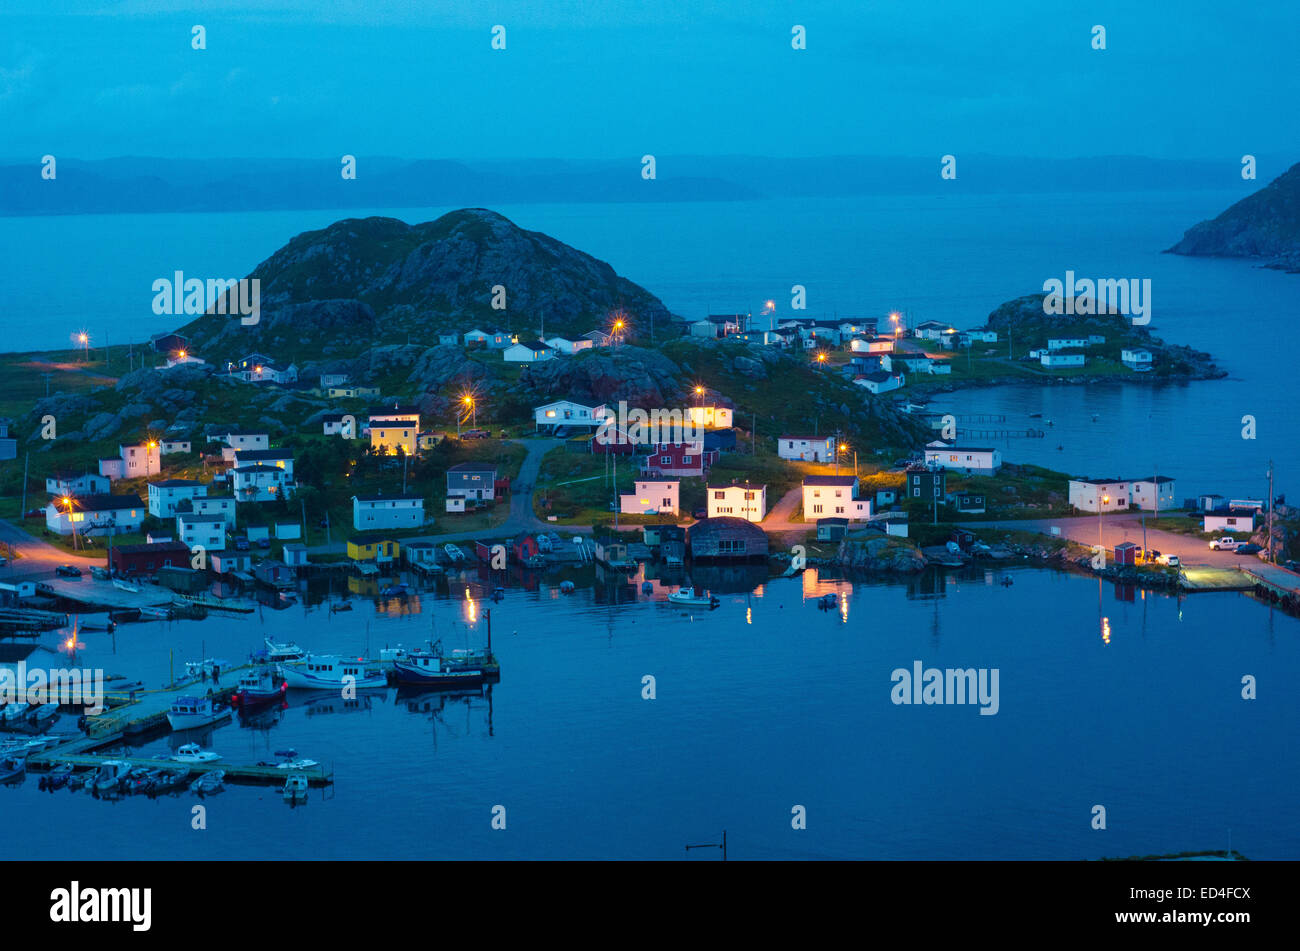 Blue hour illuminates the quaint fishing village of Ramea, Newfoundland. Stock Photo